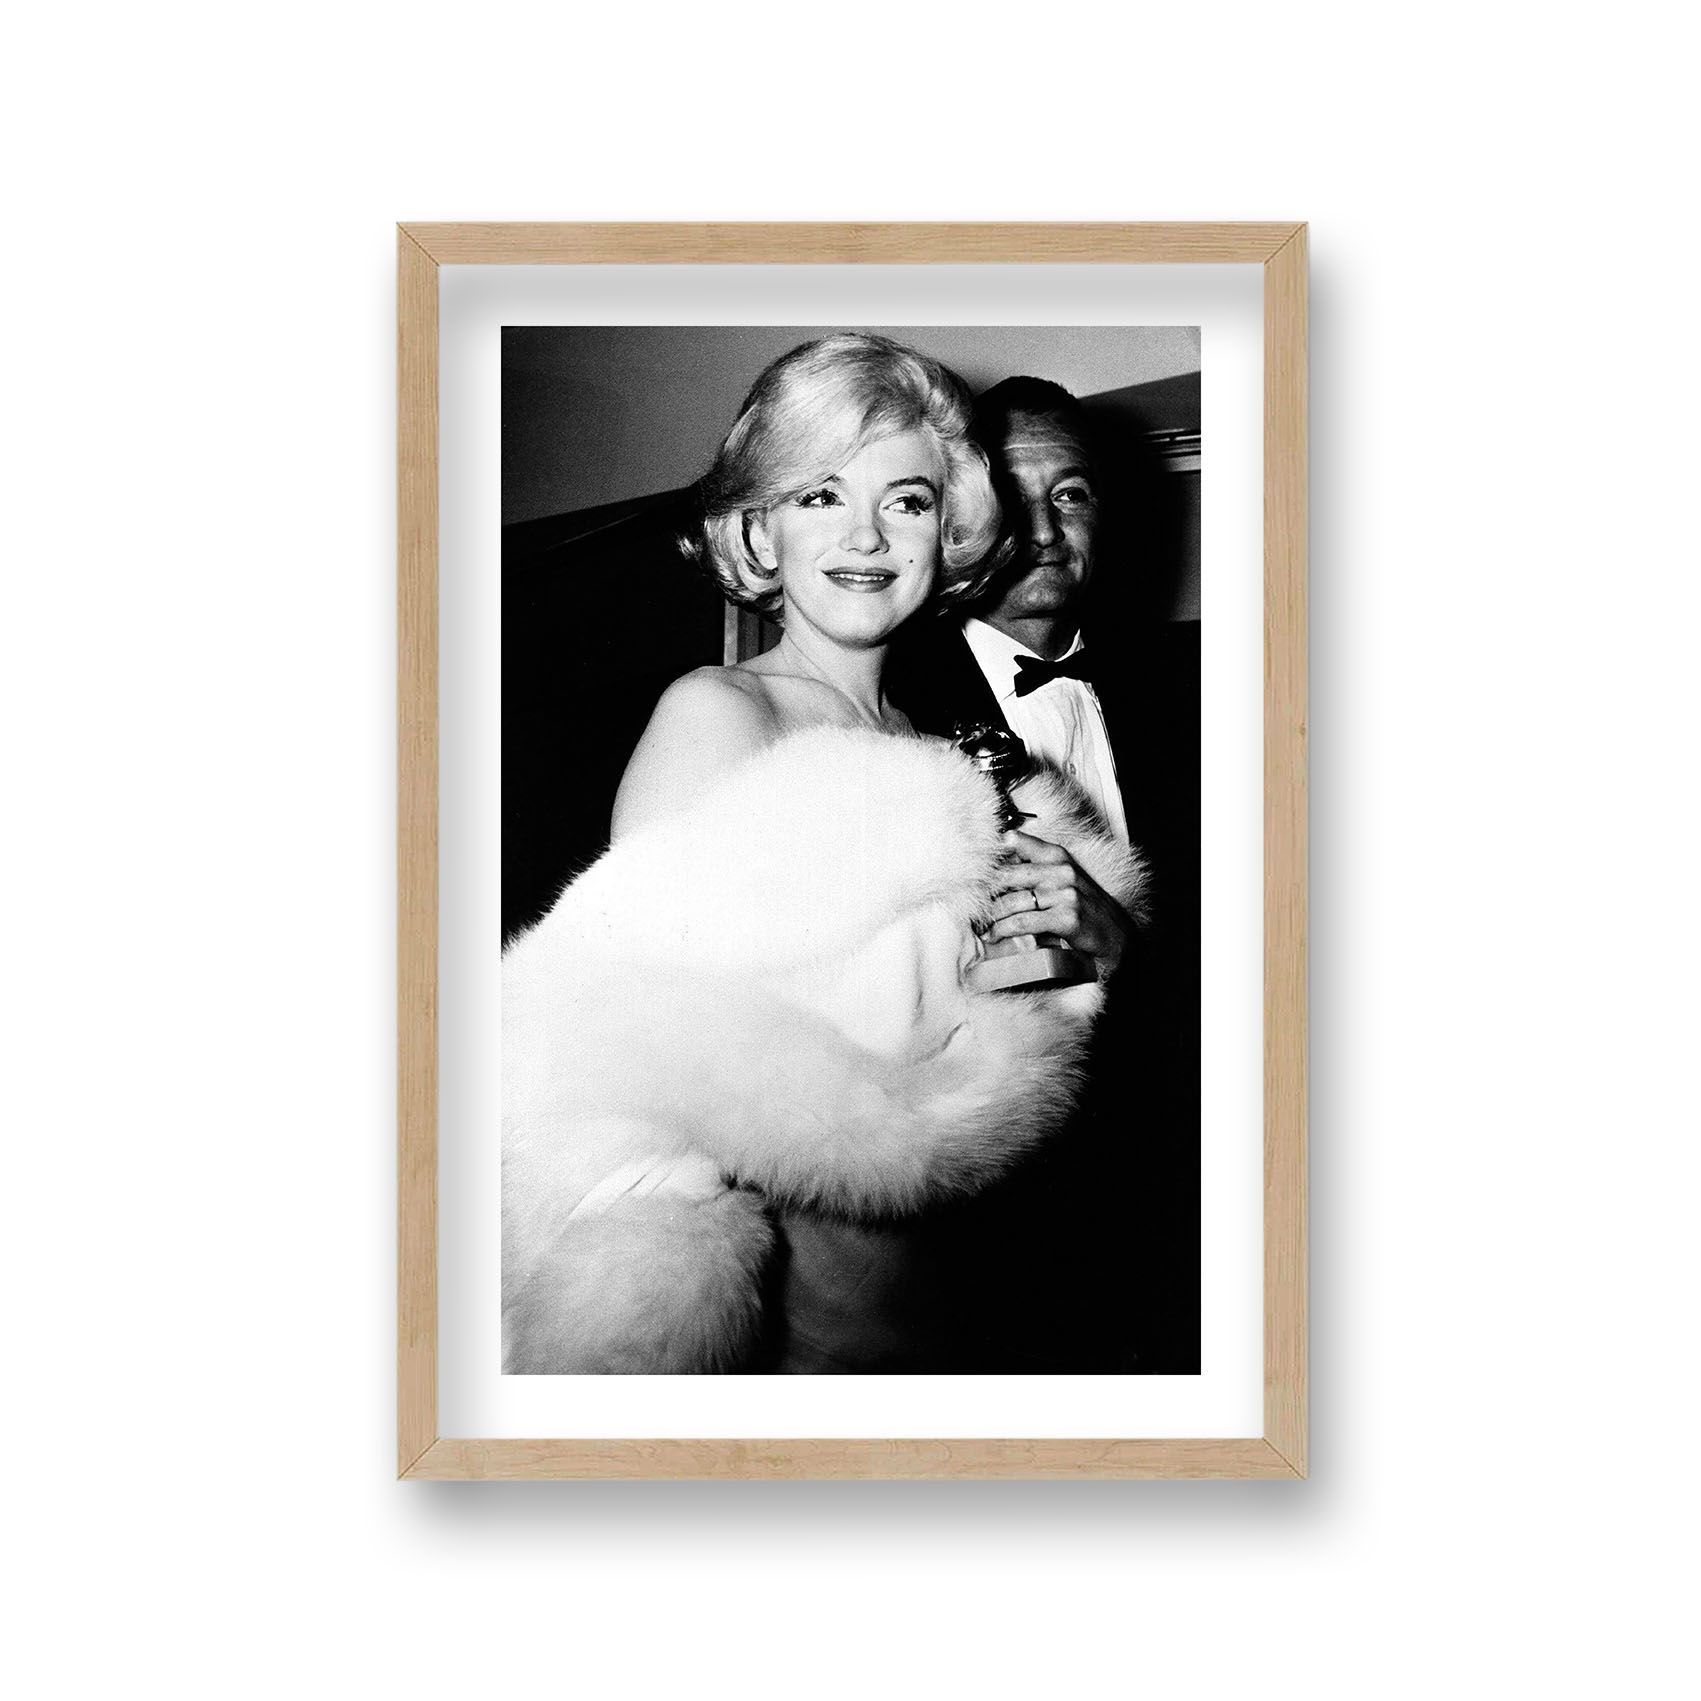 Marilyn Monroe Smiling Golden Globe Winner Wearing off the Shoulder Fur Wrap 1960 Vintage Icon Print